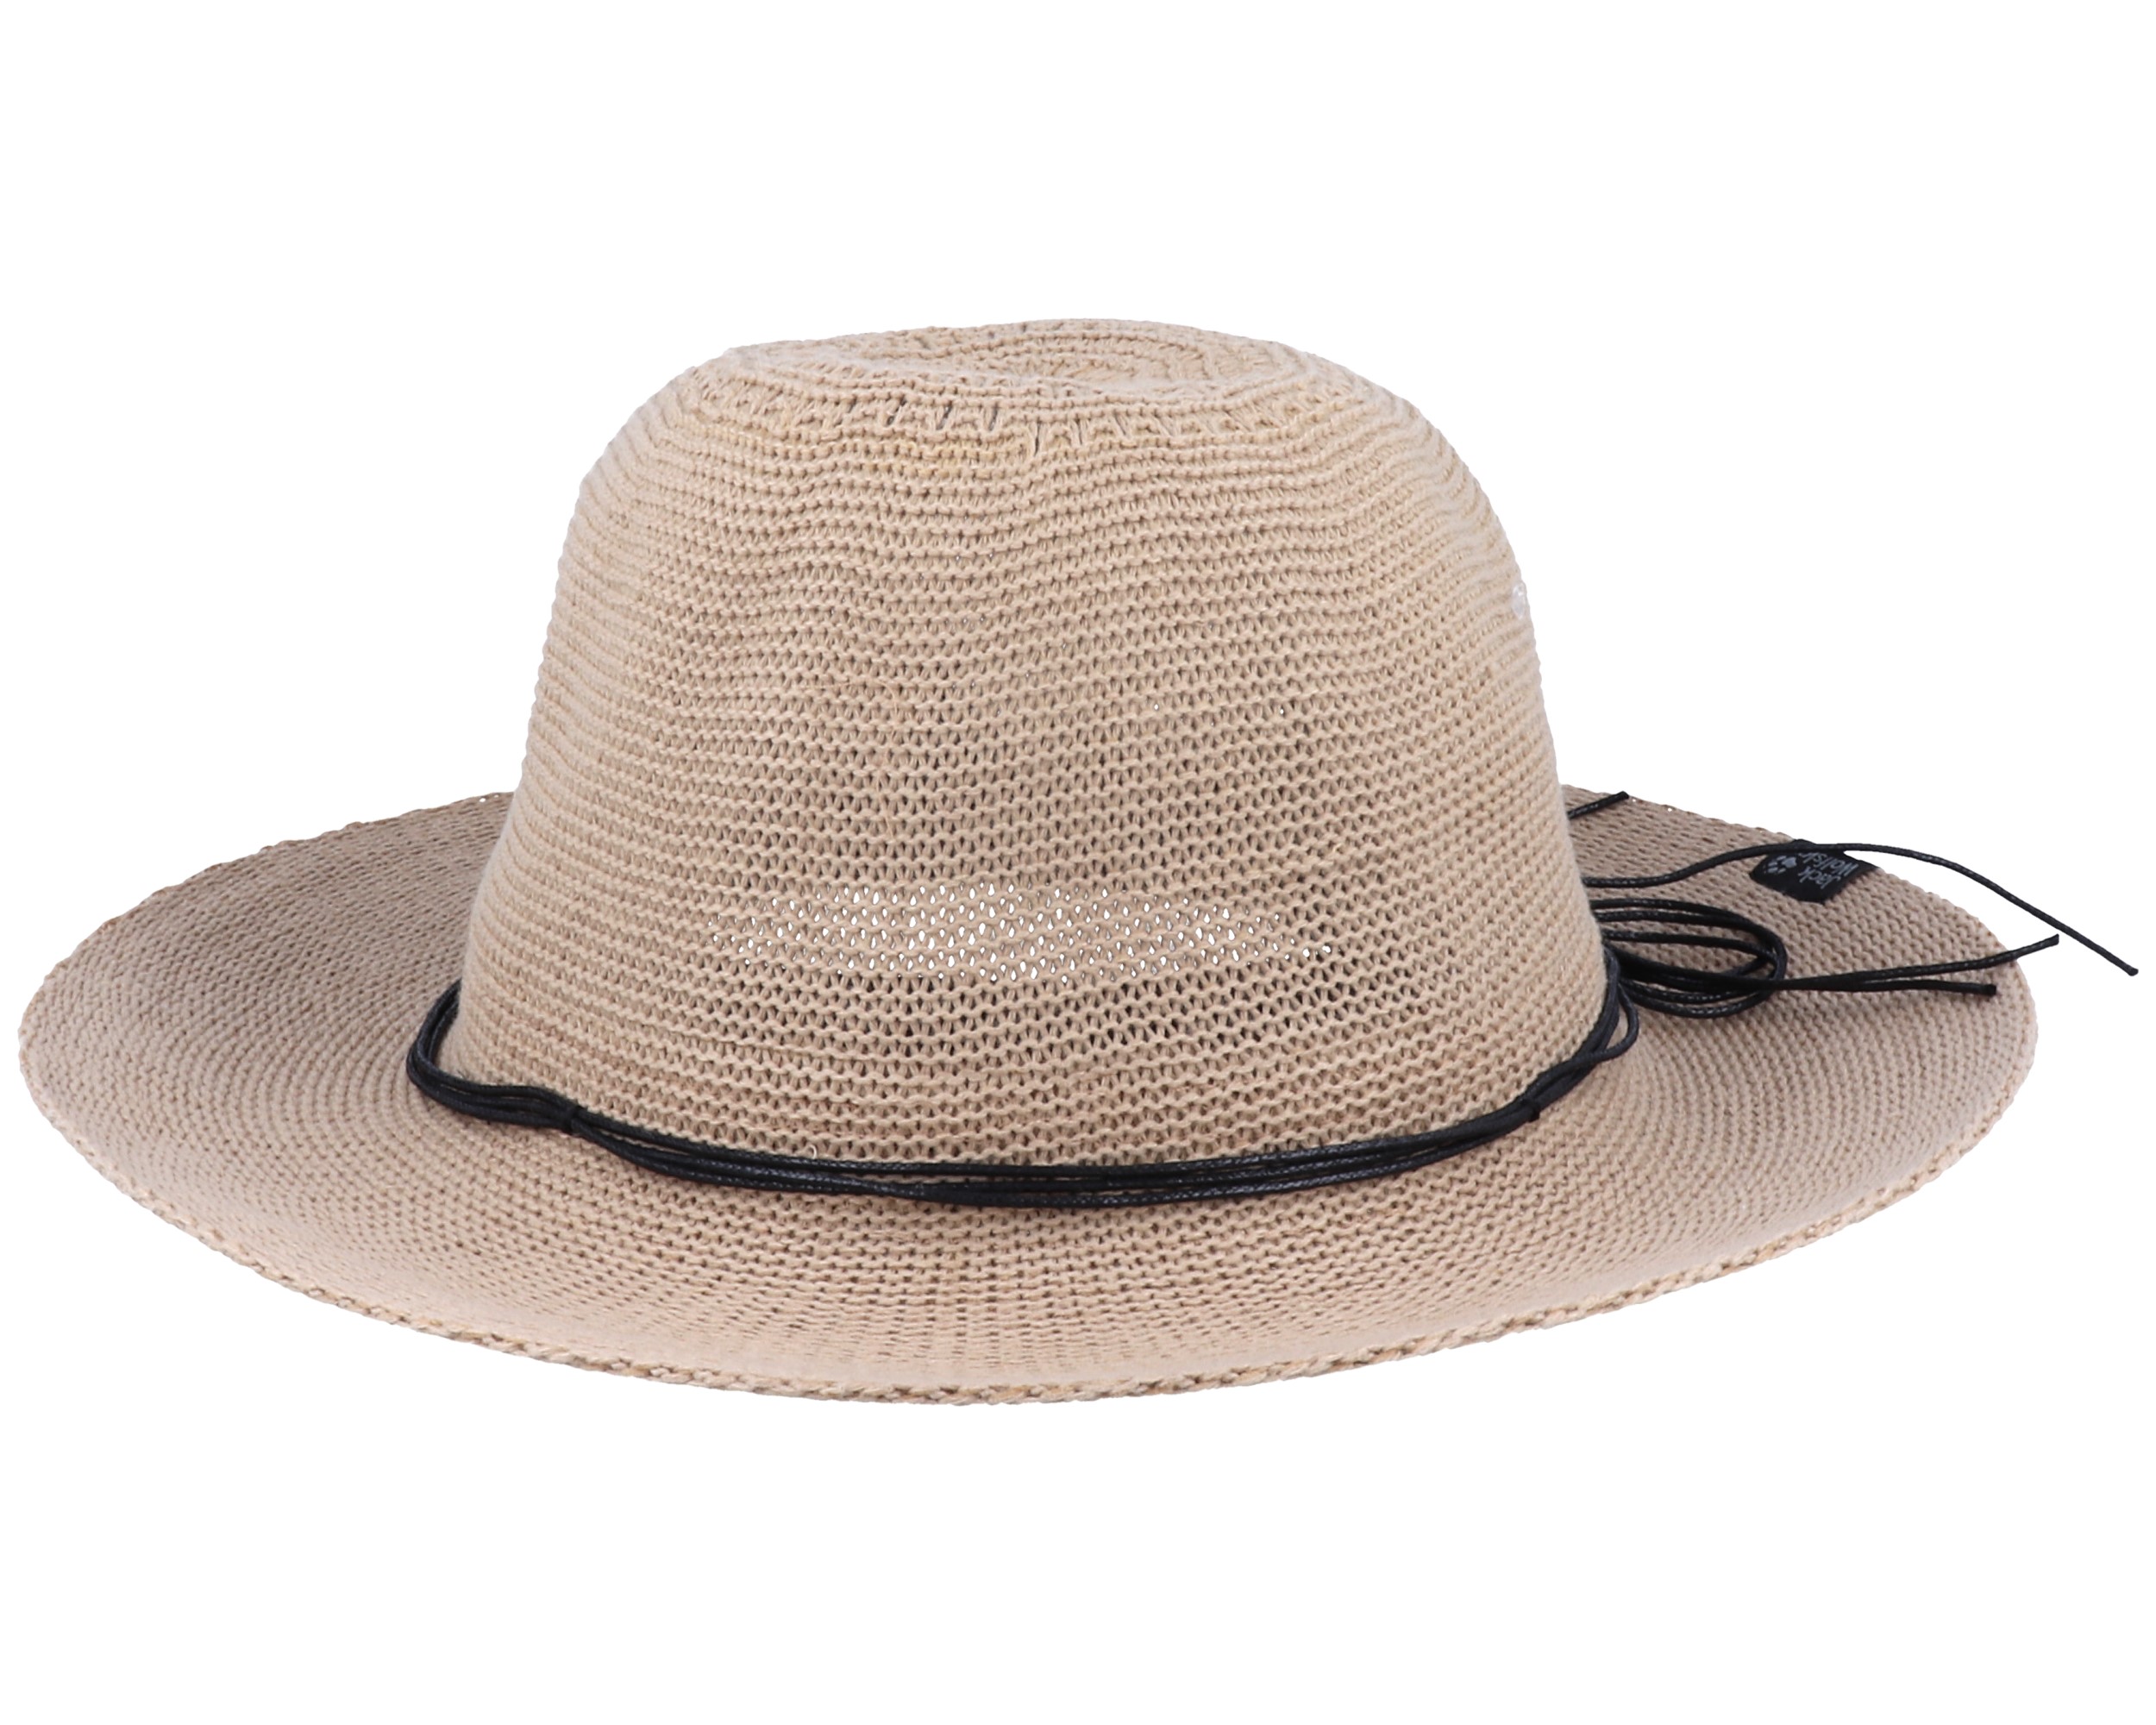 Women's Travel Hat